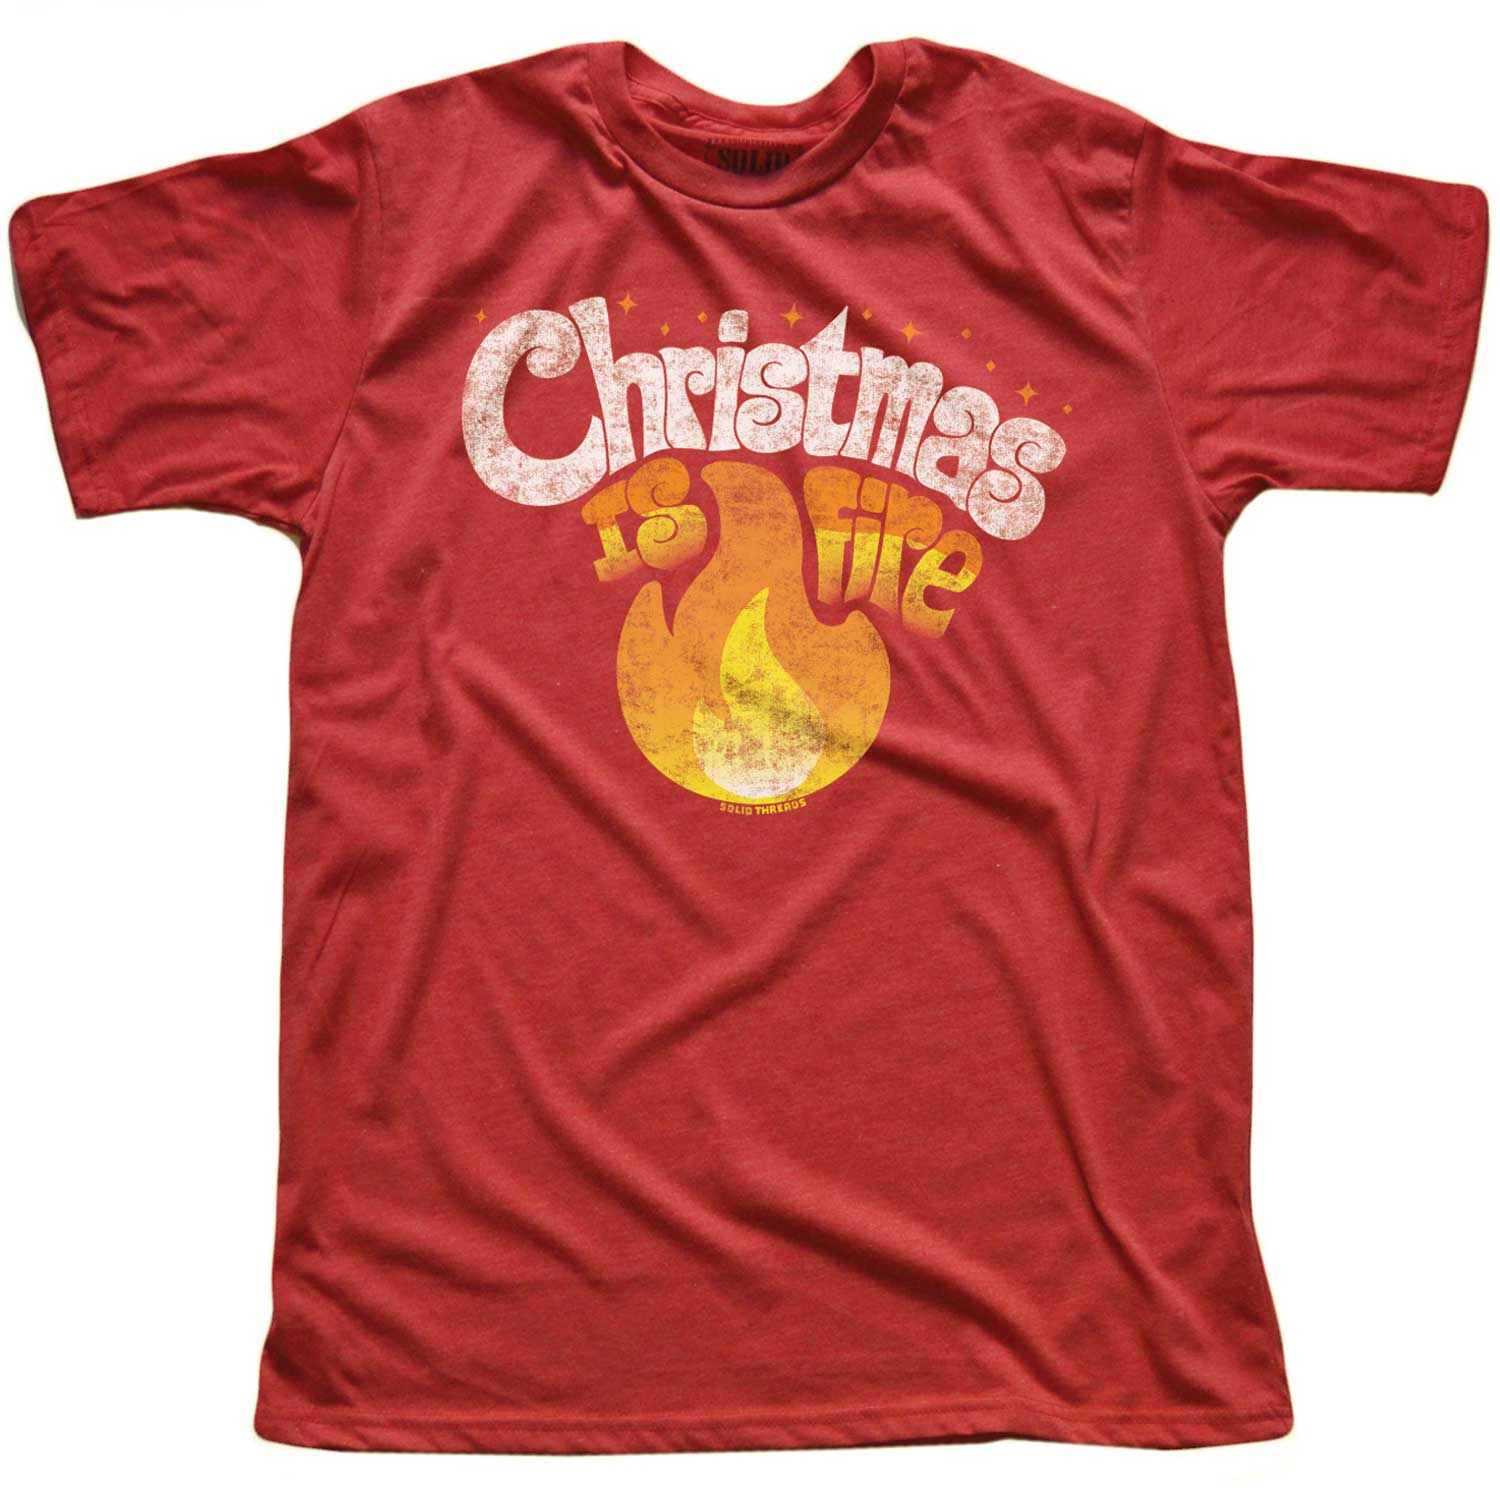 Cool Christmas Graphic Tees | Vintage Santa Claus Shirts & Gift